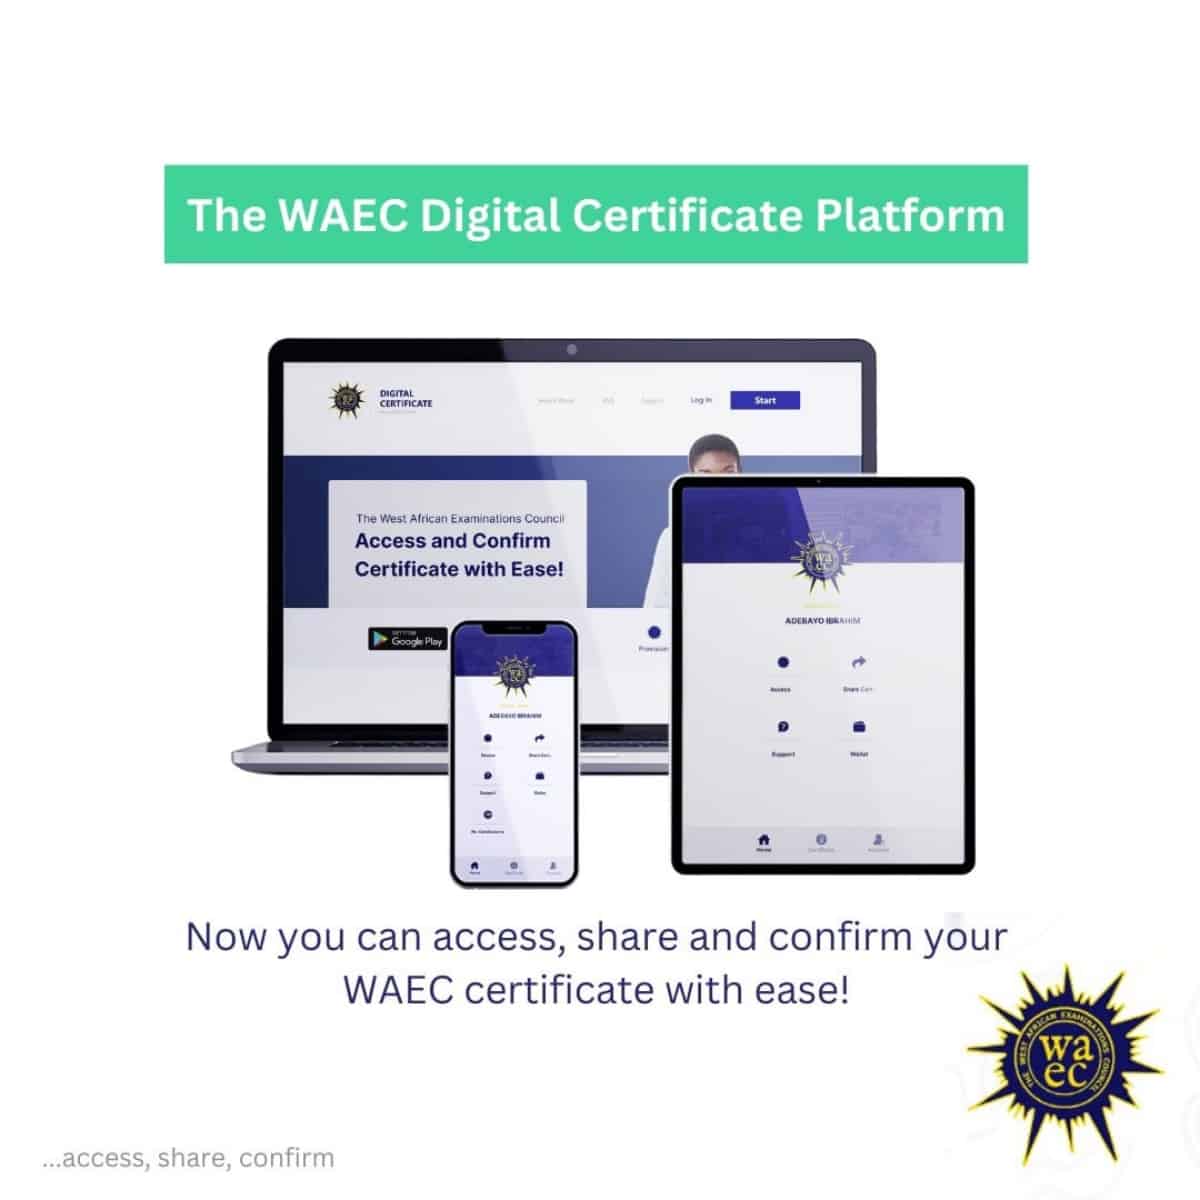 WAEC Digital Certificate Platform